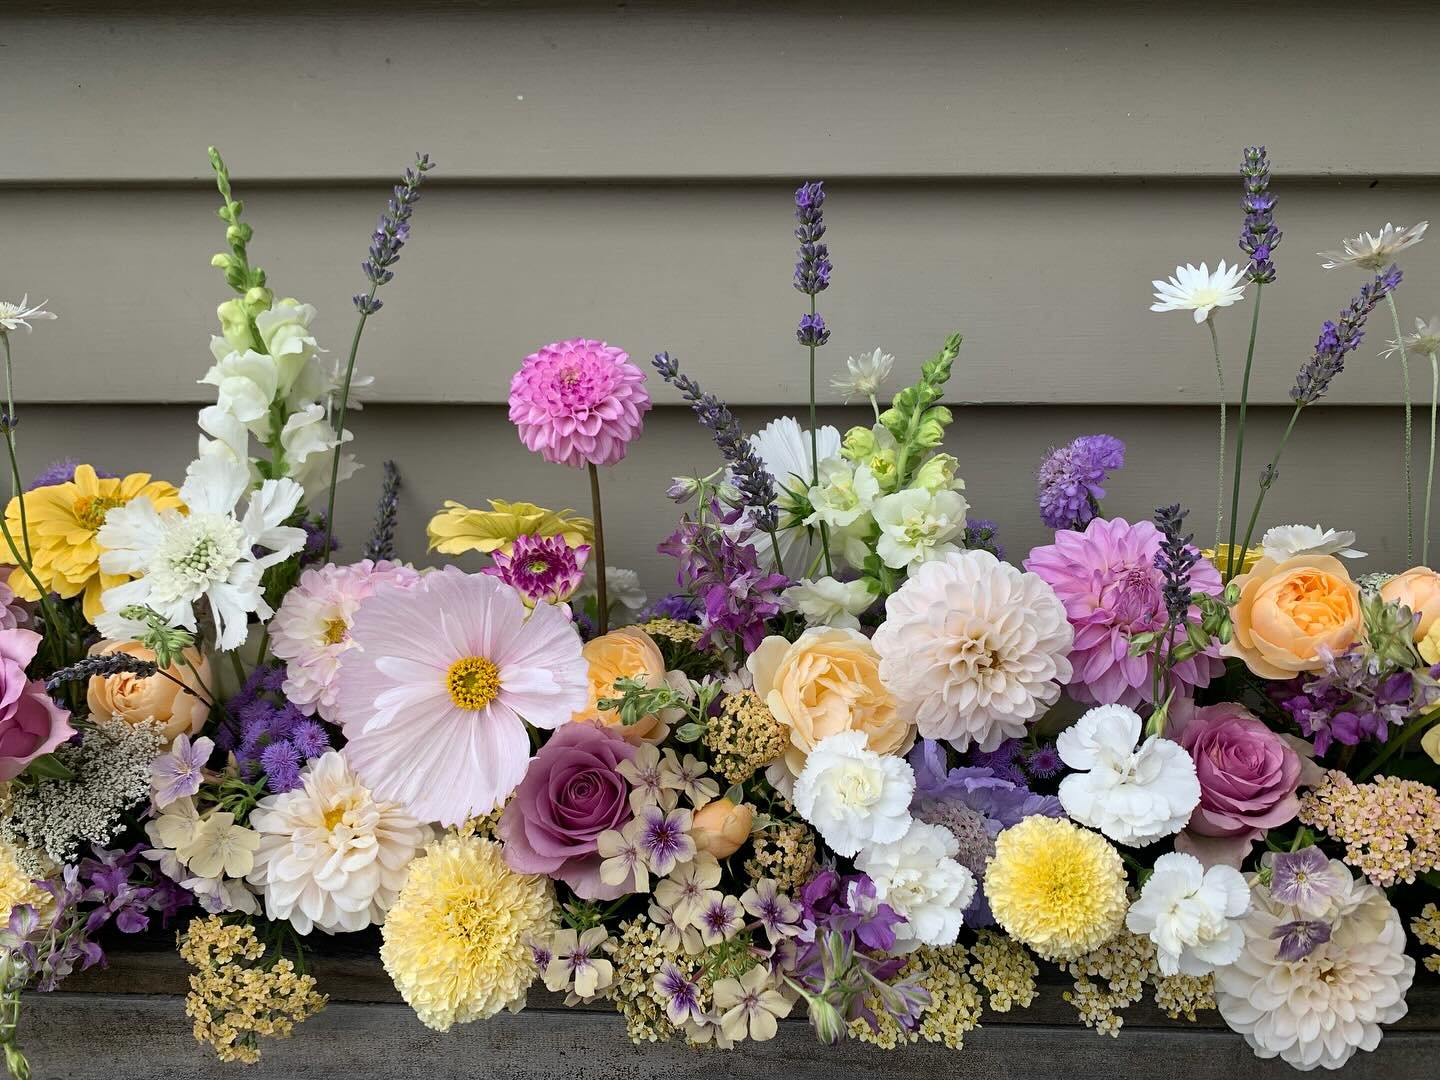 A little mid-summer meadow magic from January. 

#wedding florist #weddingflowers